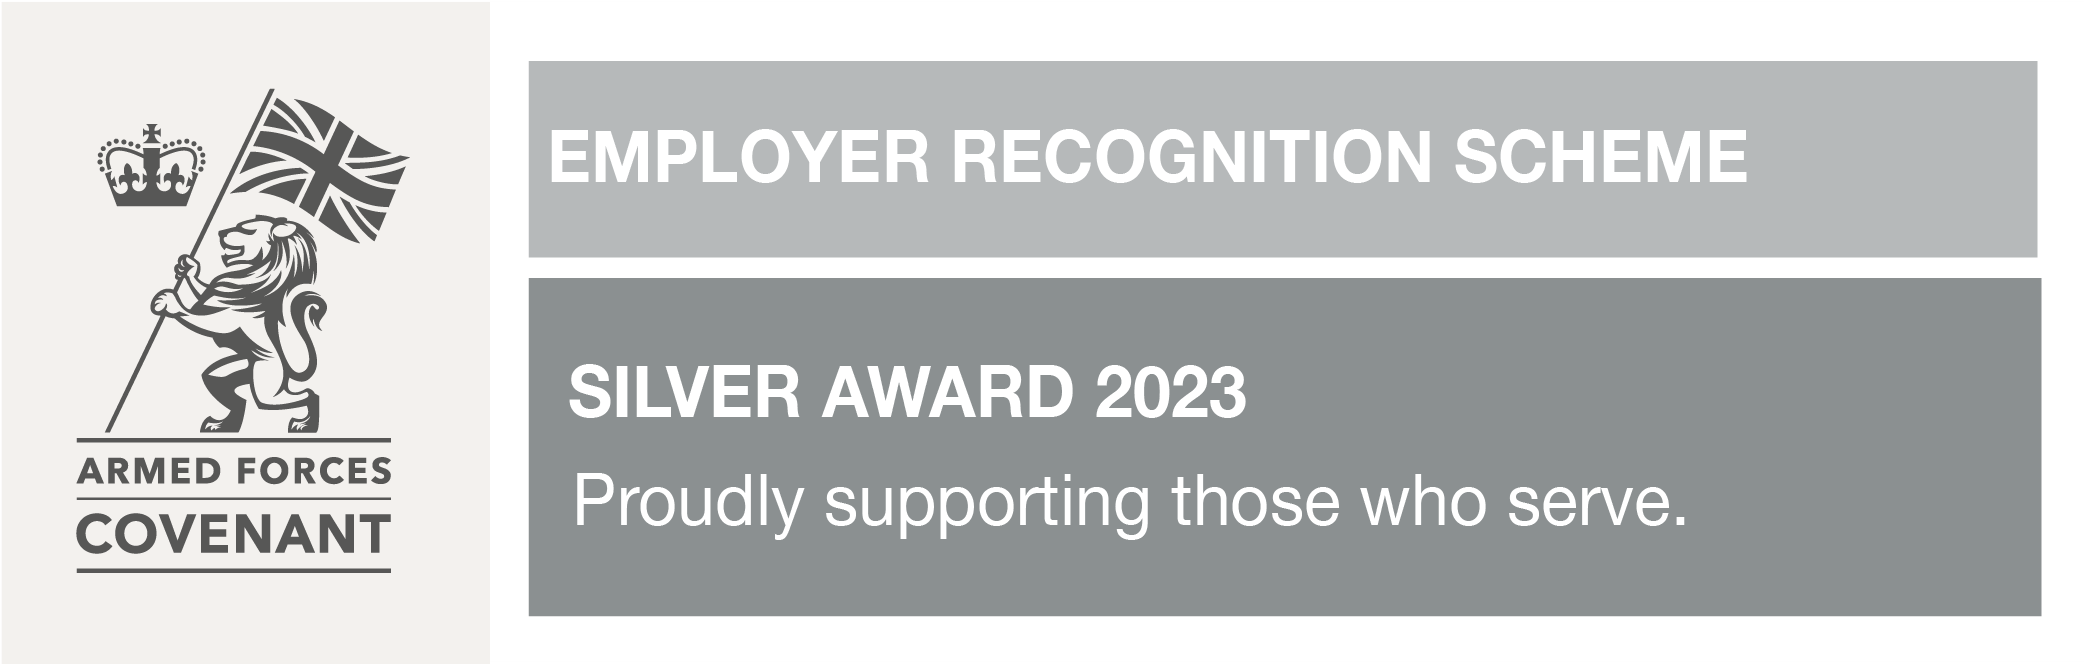 Employer Recognition Scheme Silver Award